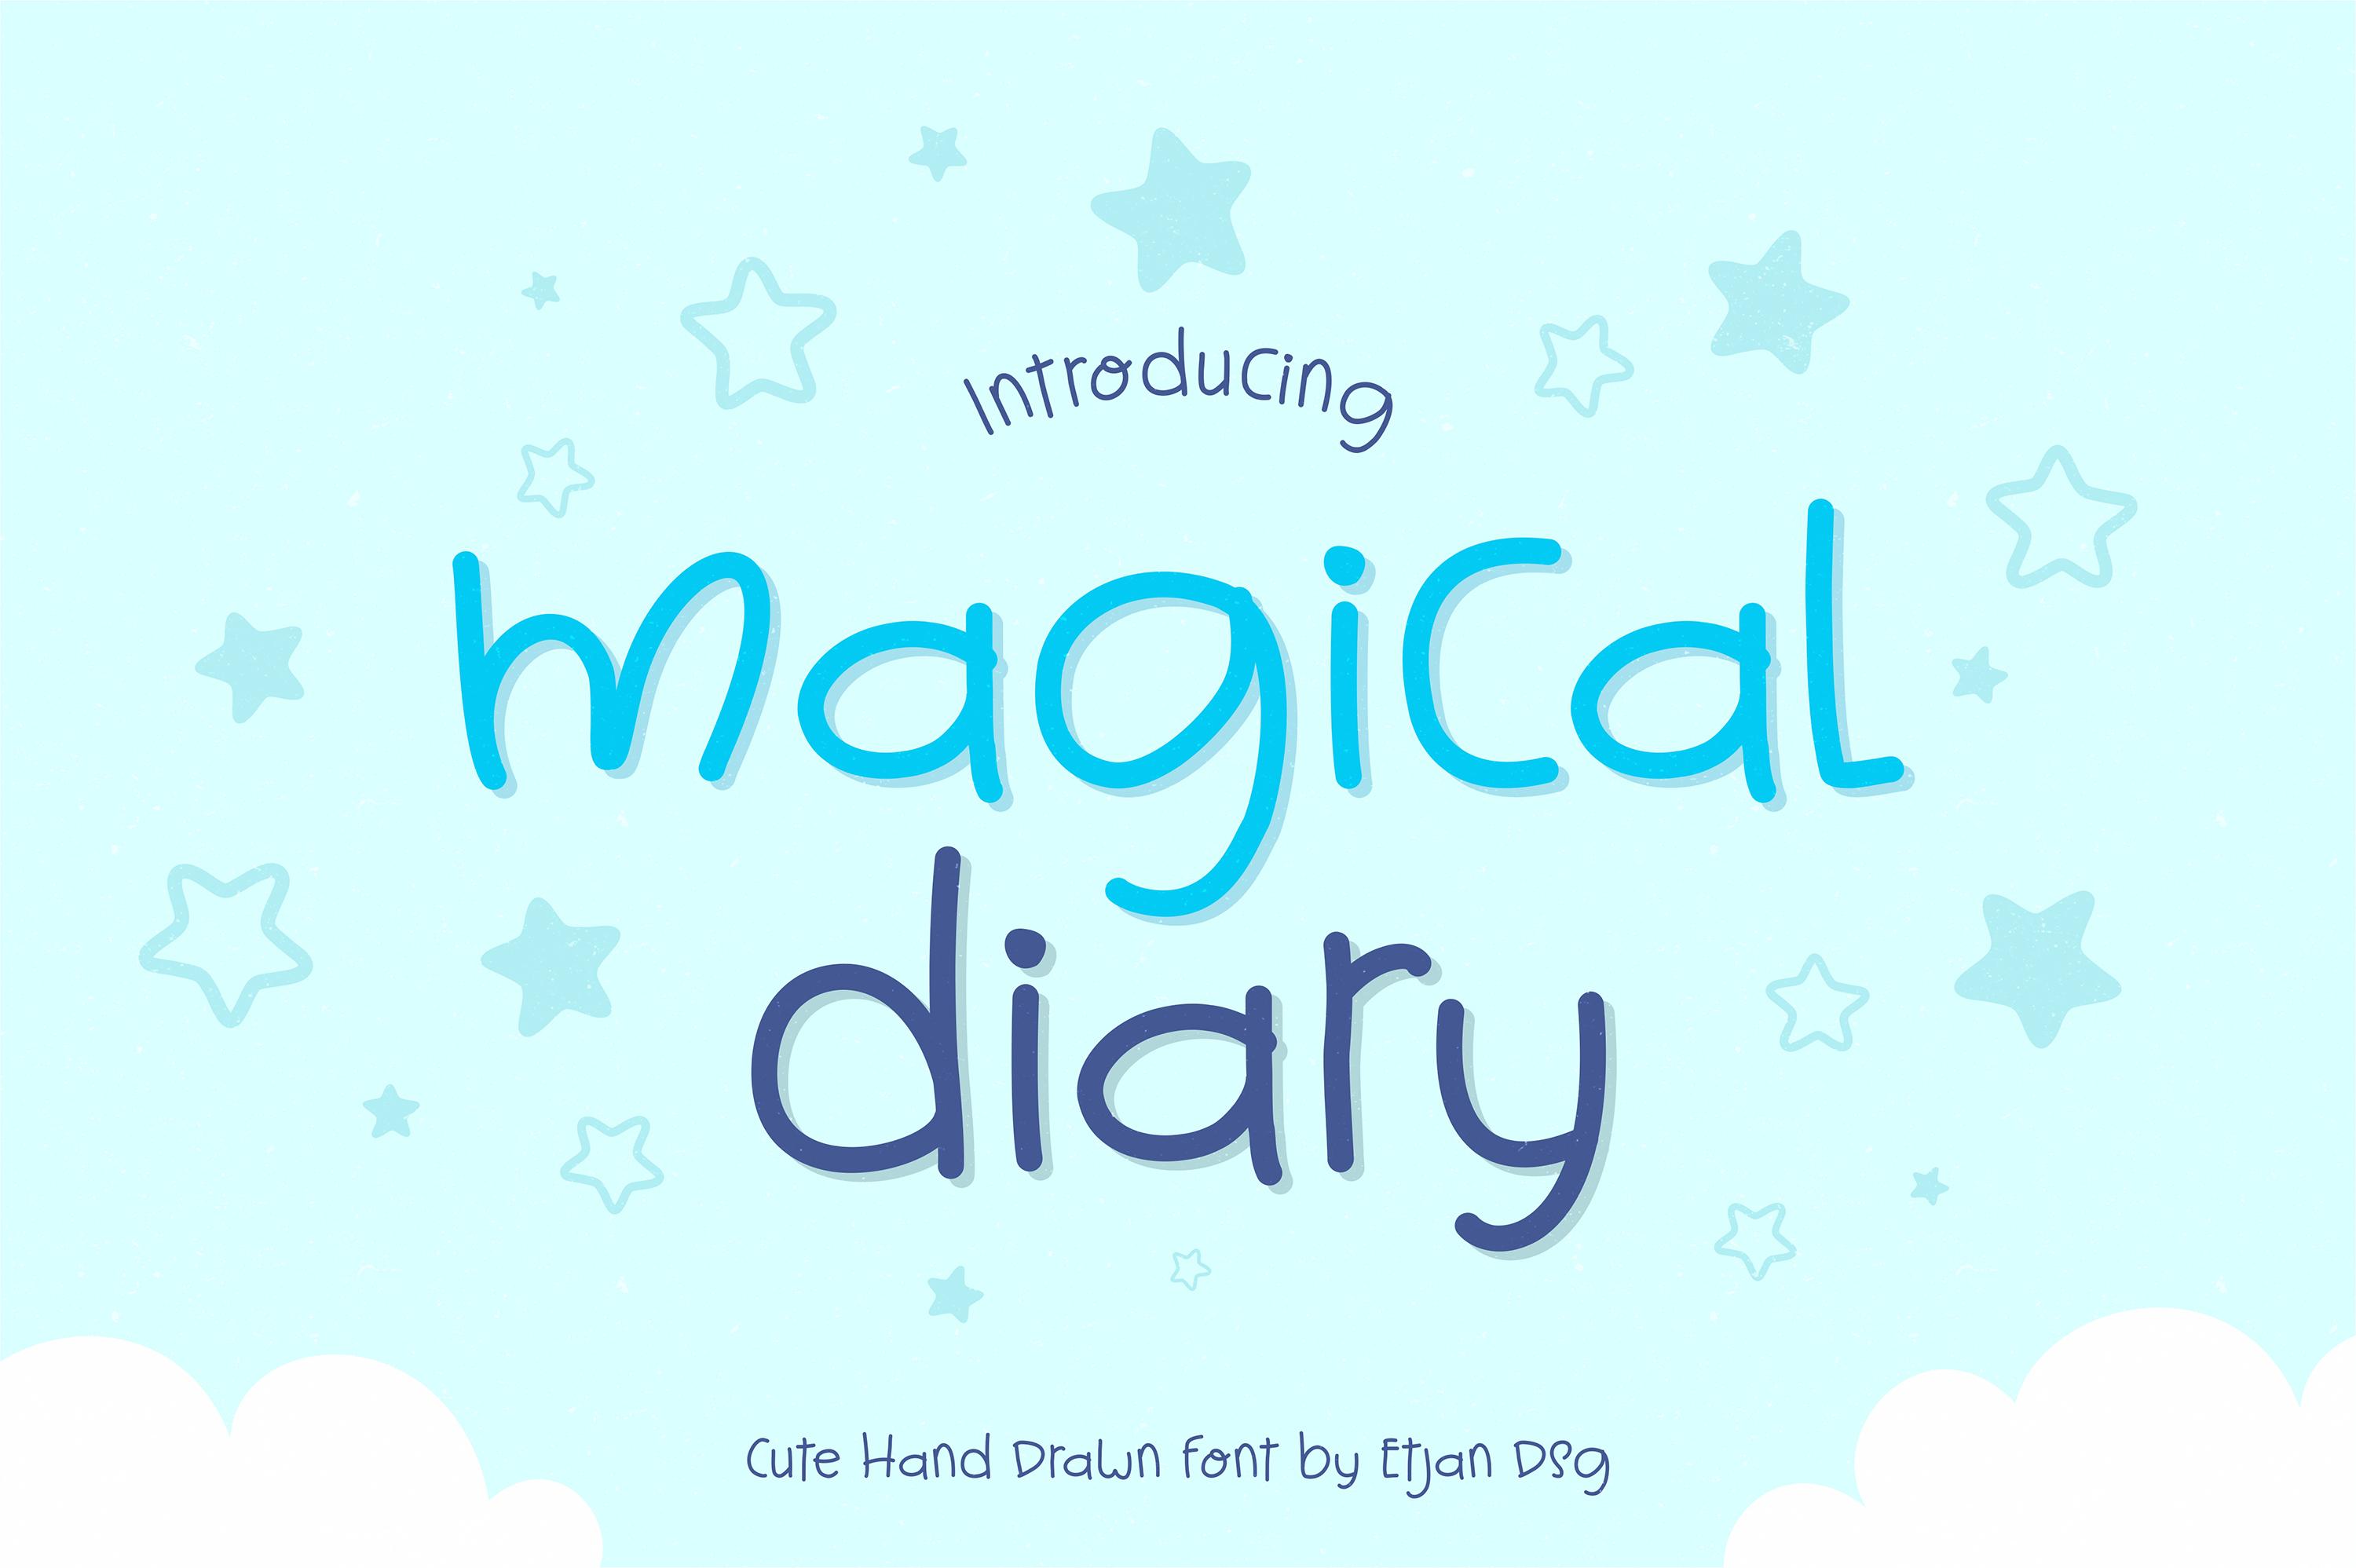 Magical Diary Font